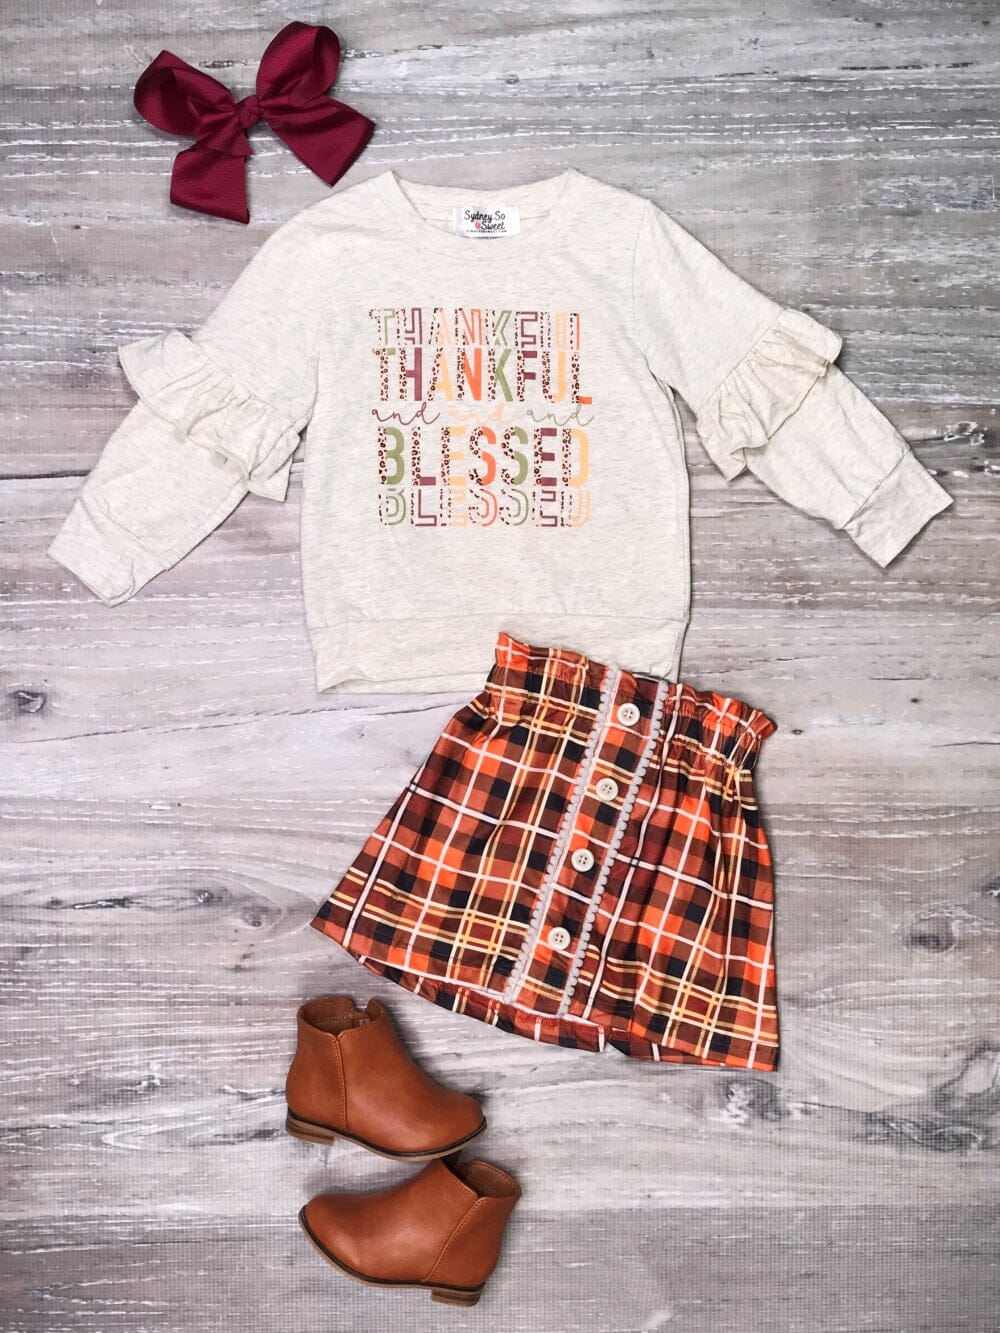 Thankful & Blessed Fall Tartan Plaid Ruffle Girls Skirt Outfit 12-18 Months